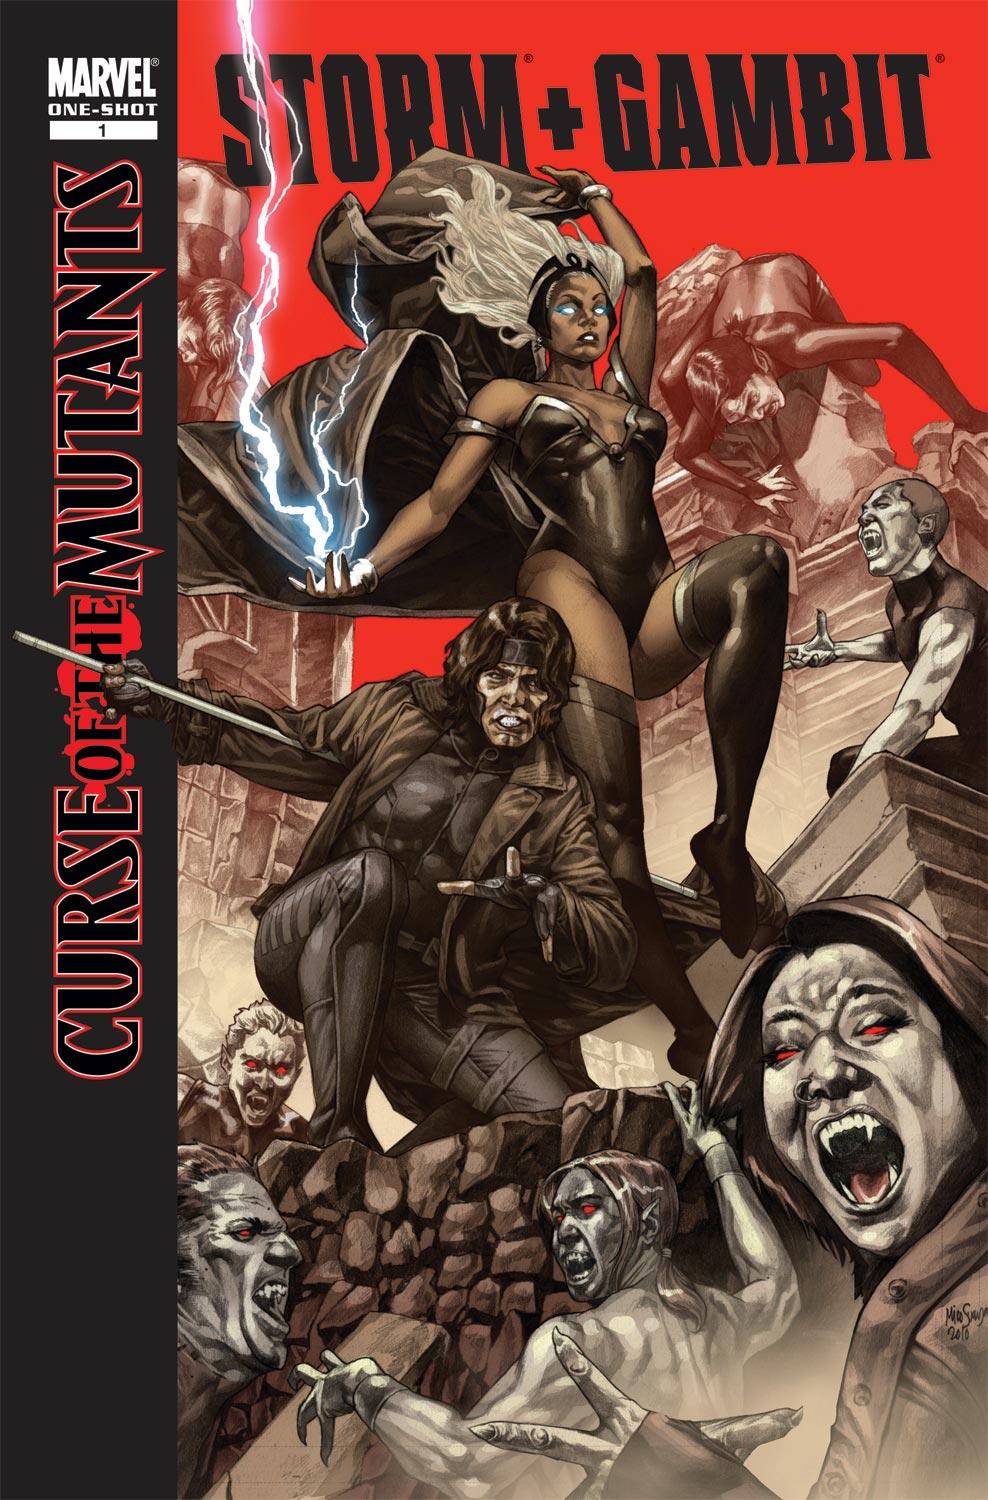 X-Men: Curse of the Mutants - Storm & Gambit (2010) #1